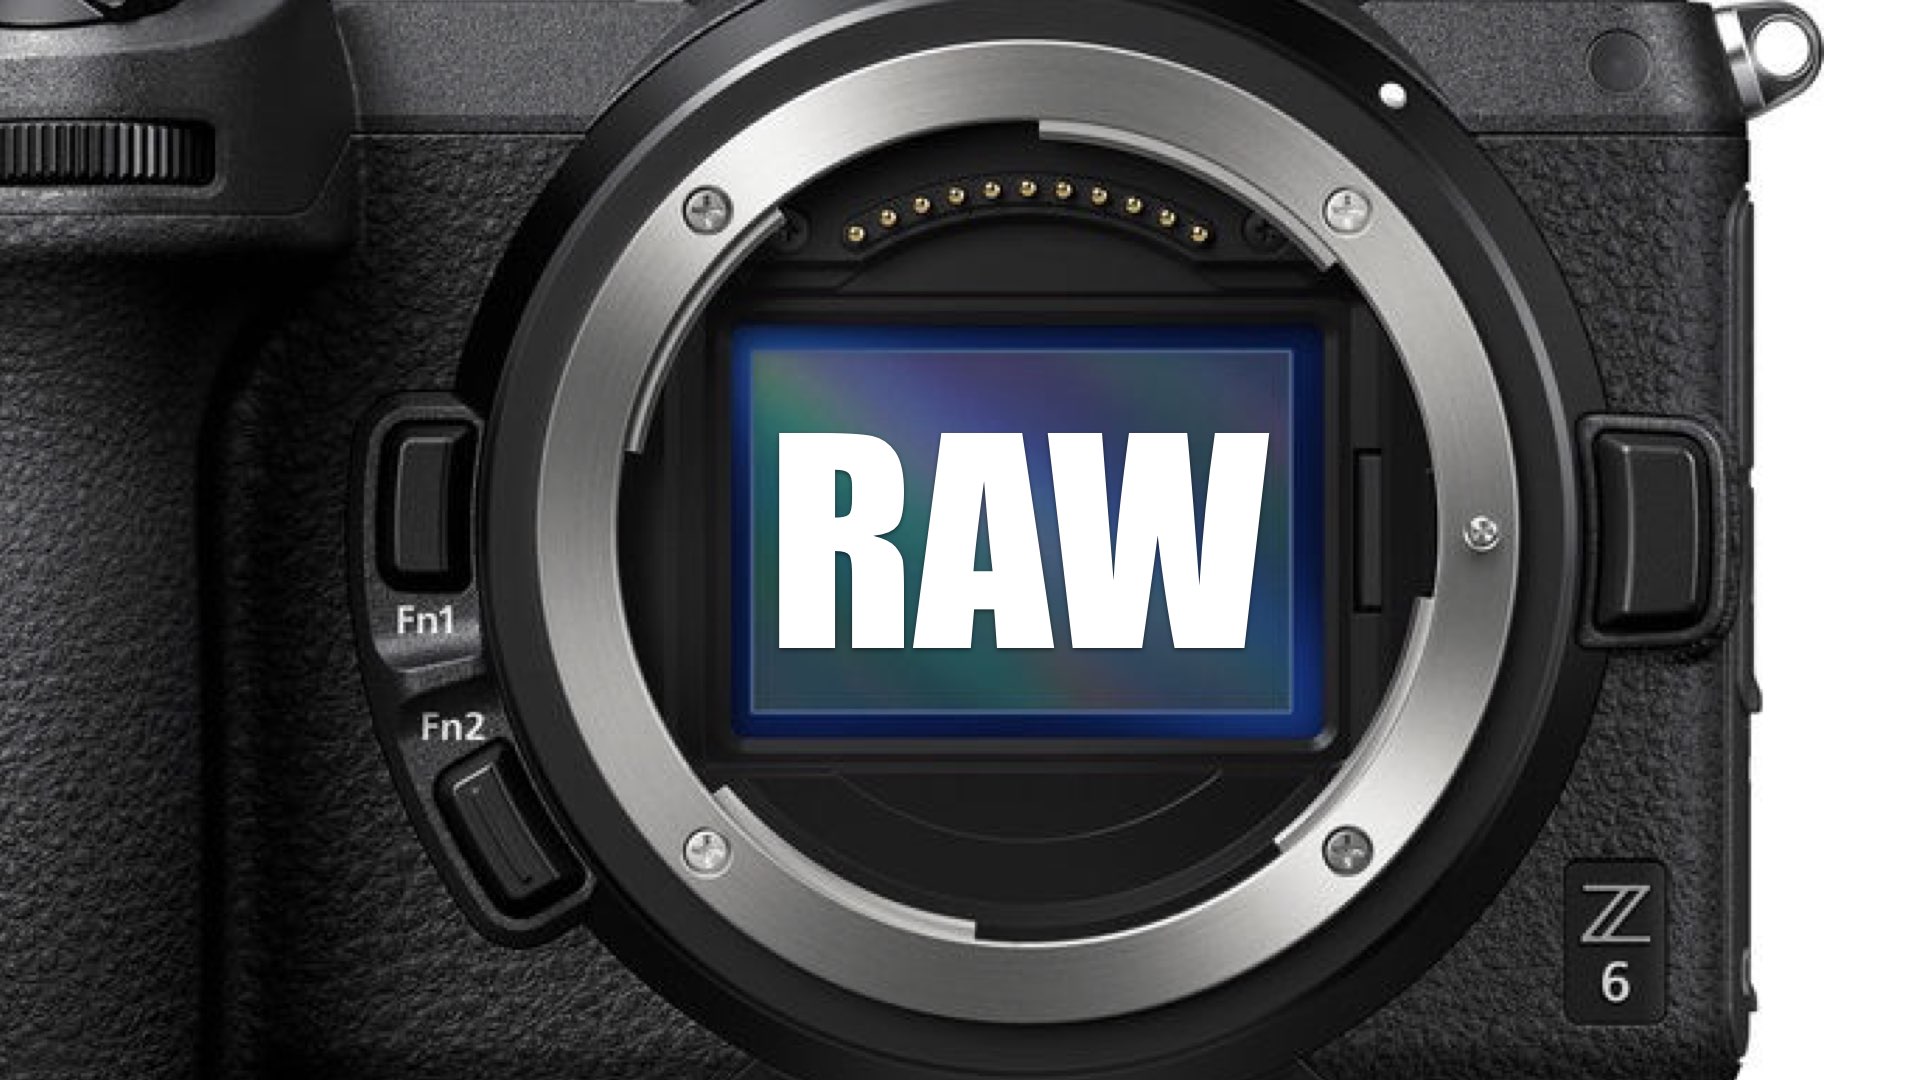 Nikon Z series shoots RAW